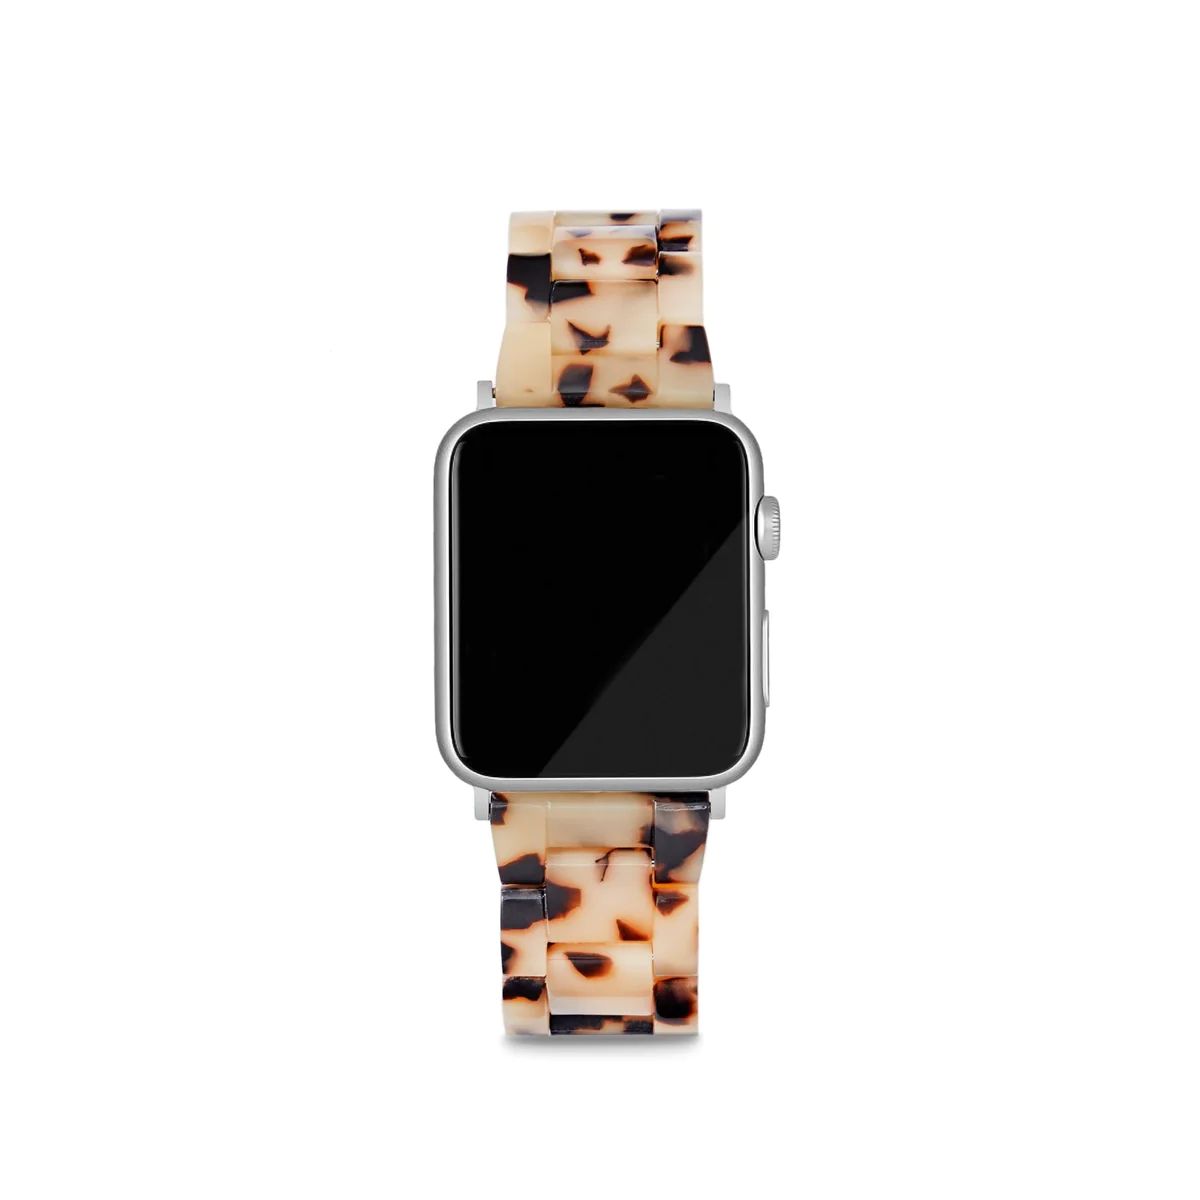 Apple Watch Band in Blonde Tortoise | Machete